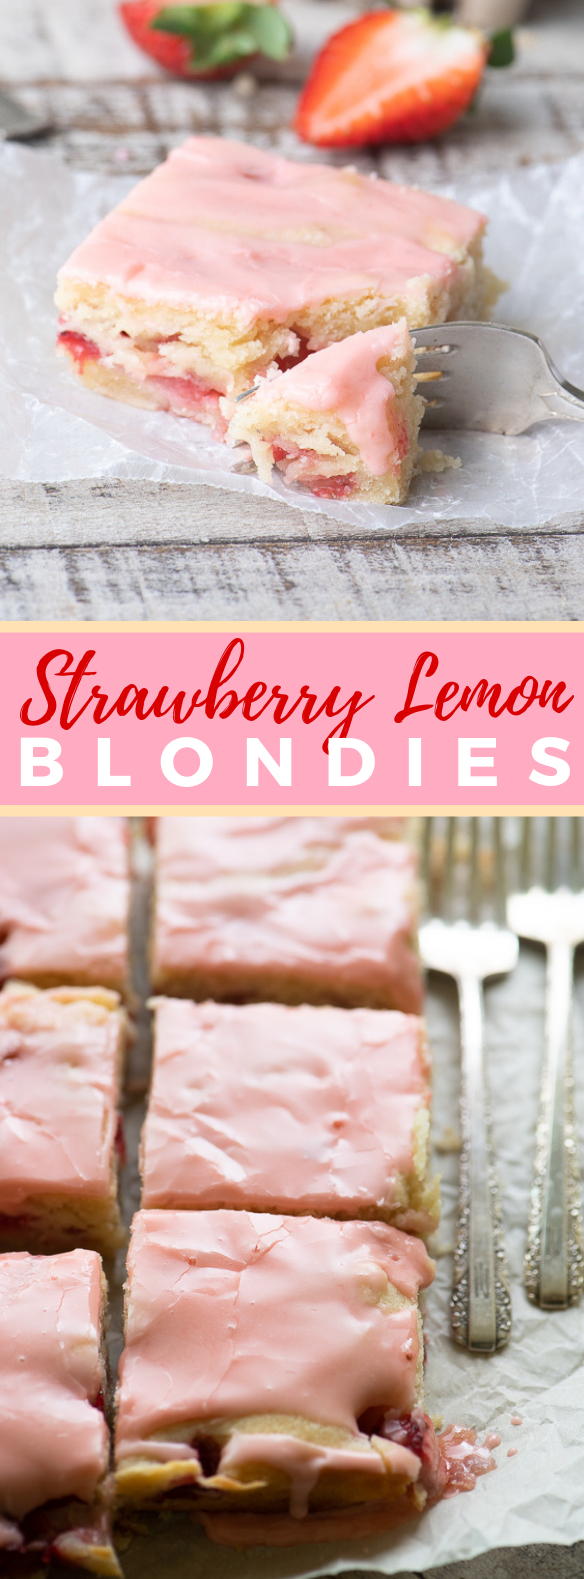 STRAWBERRY LEMON BLONDIES #desserts #berry